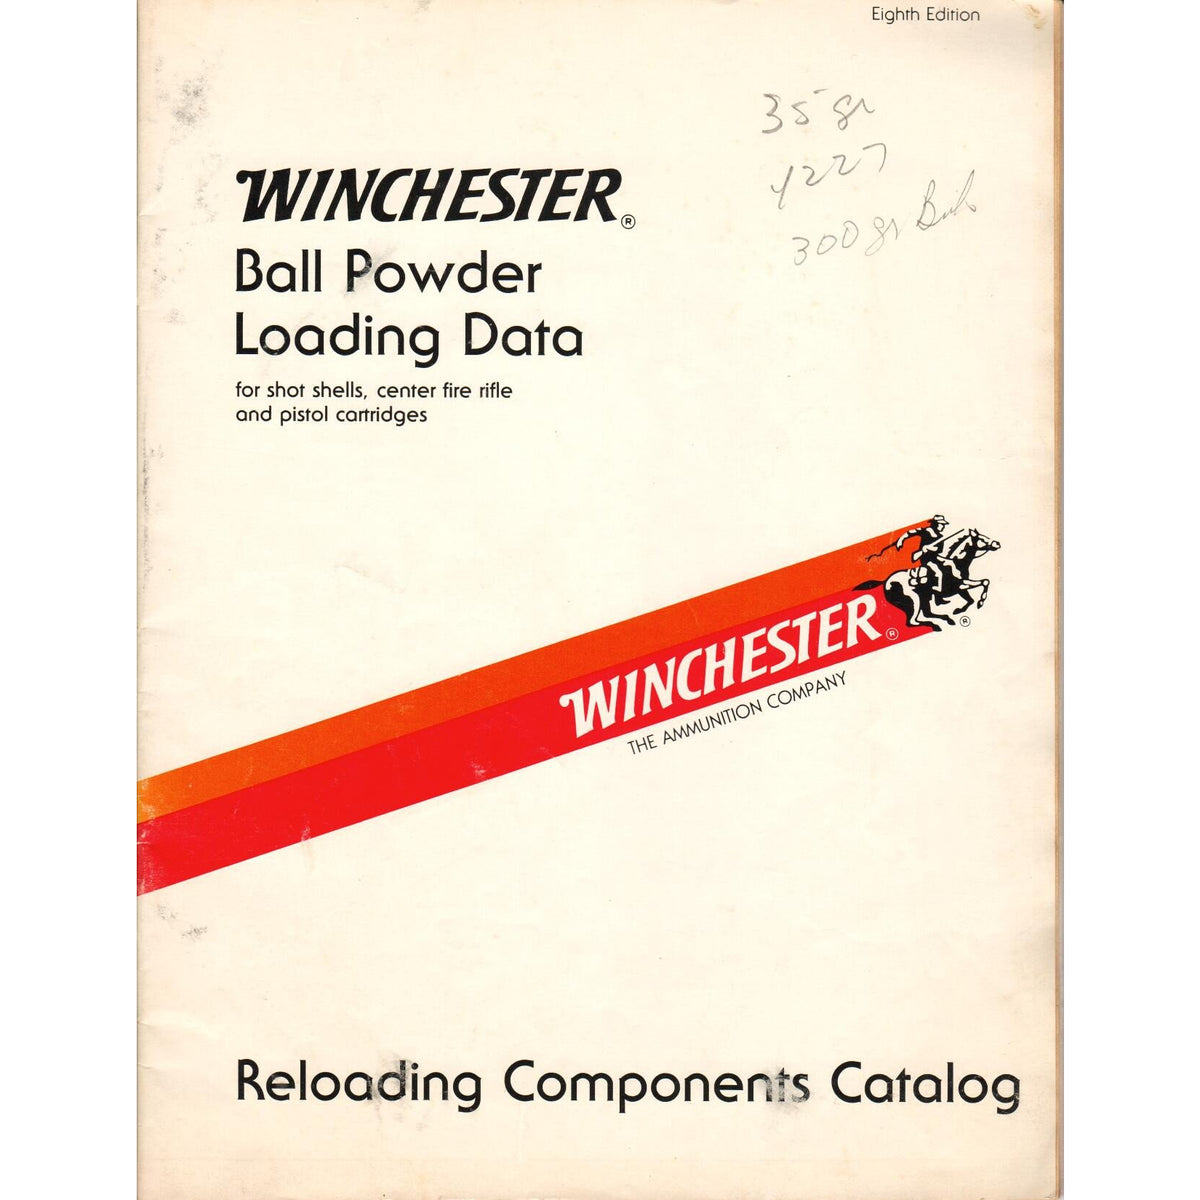 Winchester Ball Powder Loading Data 8th Edition